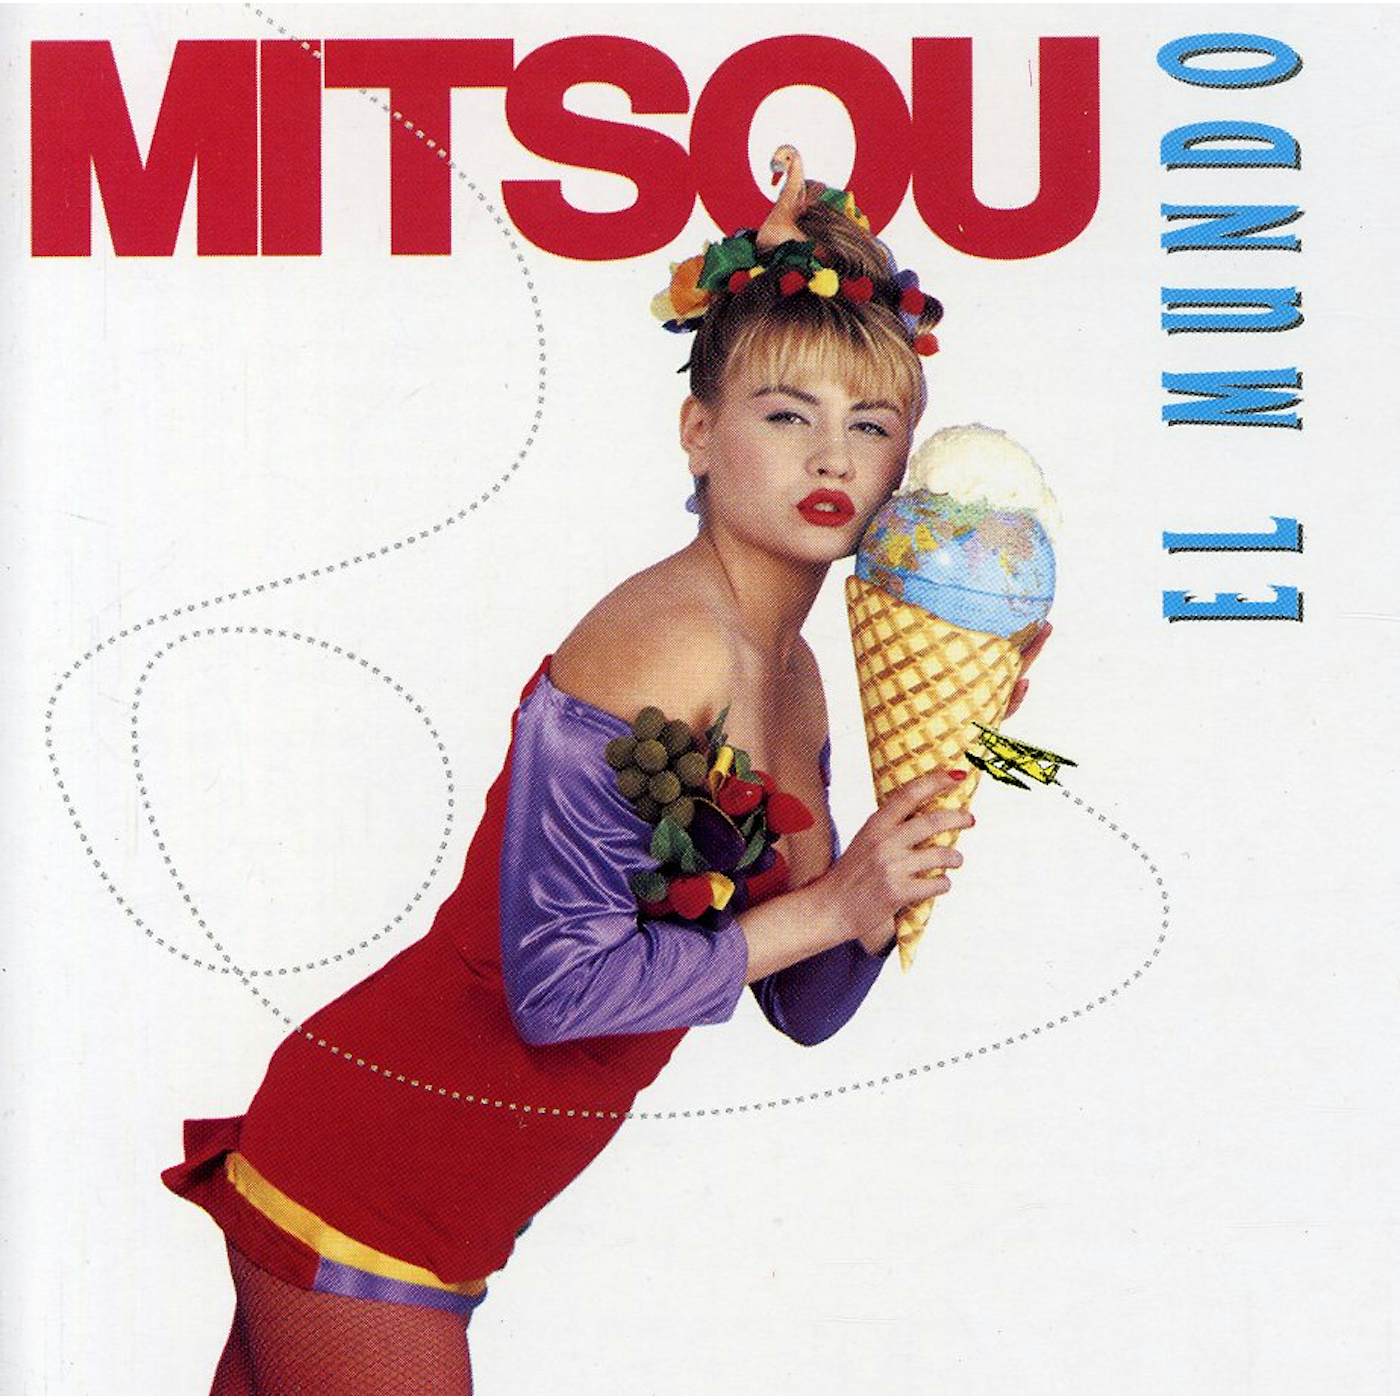 Mitsou EL MUNDO CD